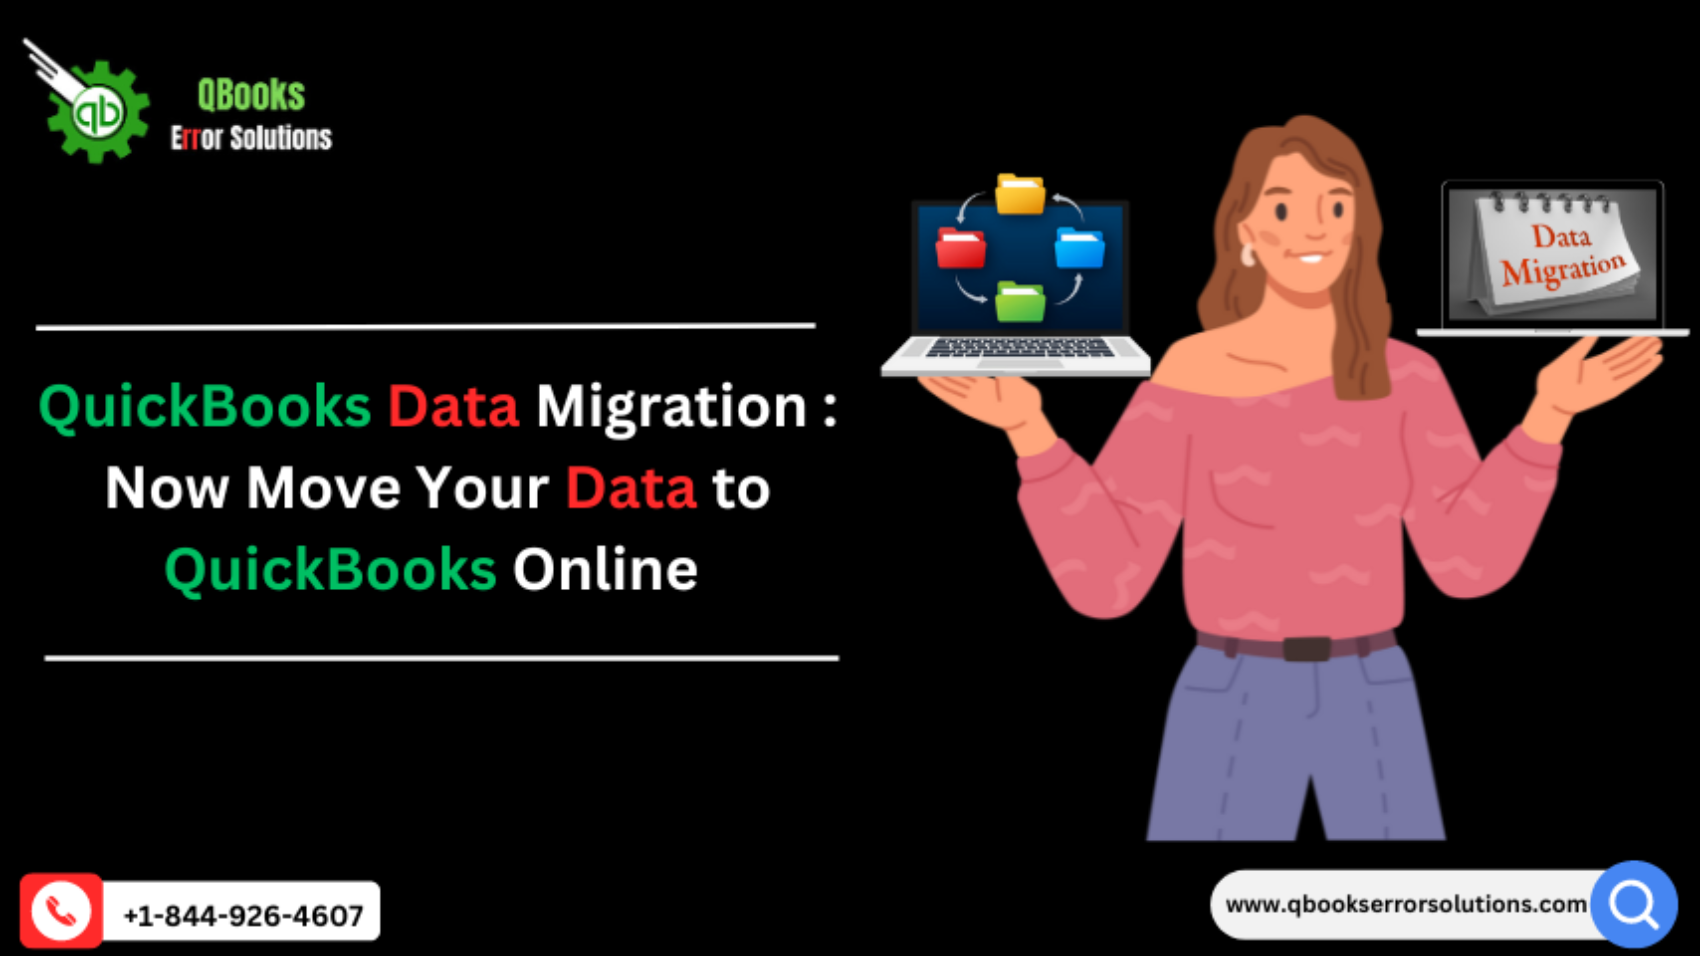 QuickBooks Data Migration - Move Your Data to QuickBooks Online